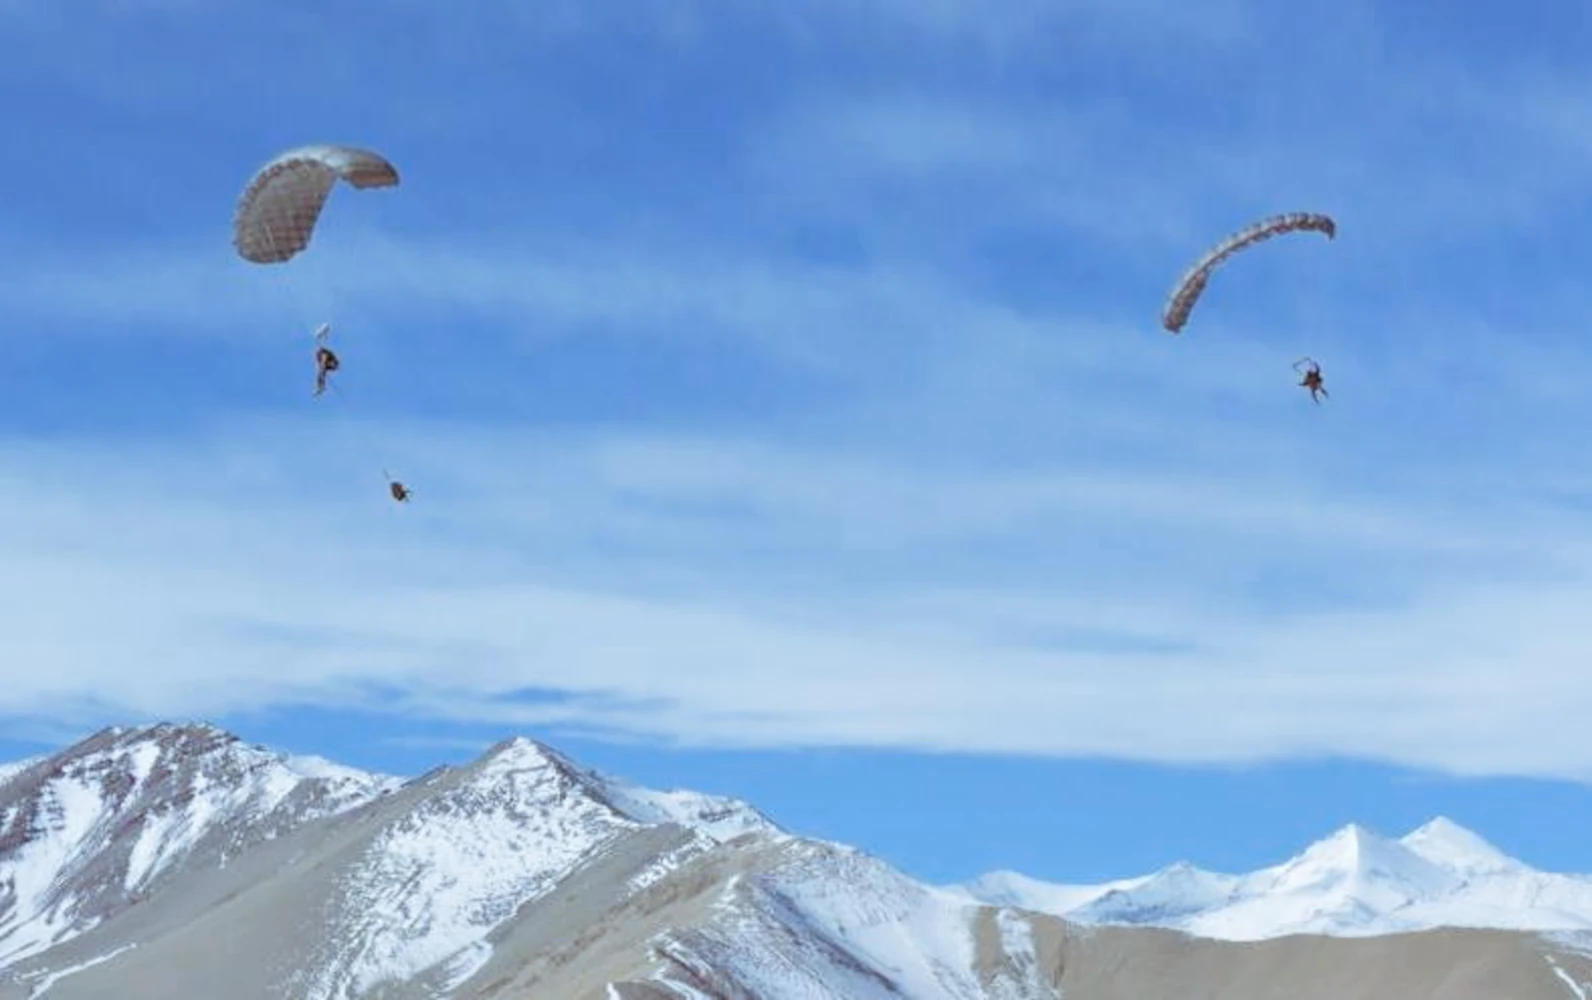 Para jumping in Eastern Ladakh